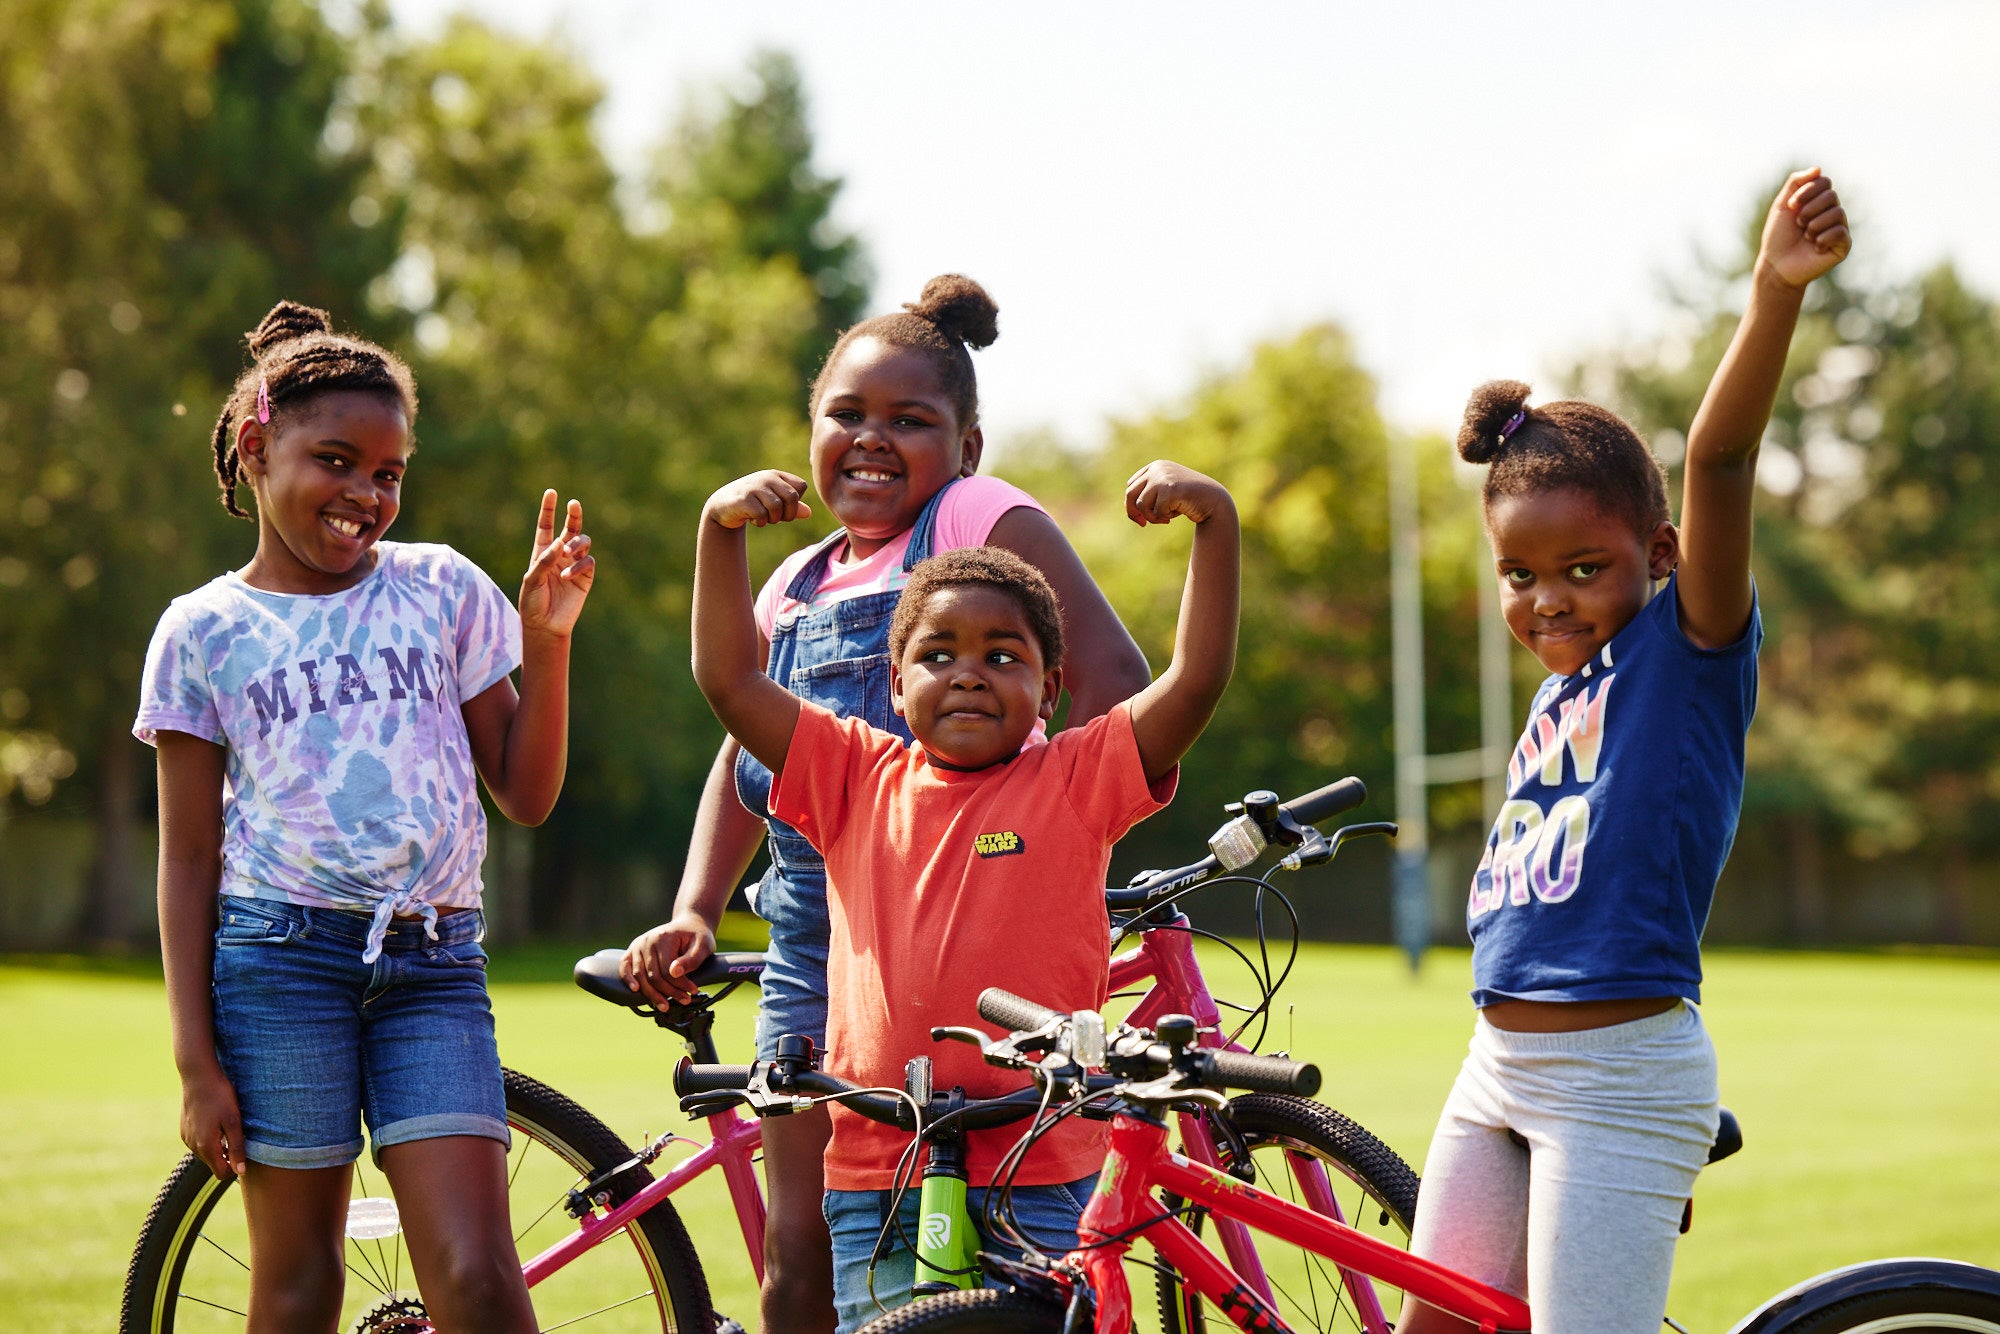 several kids looking very happy on their bikes